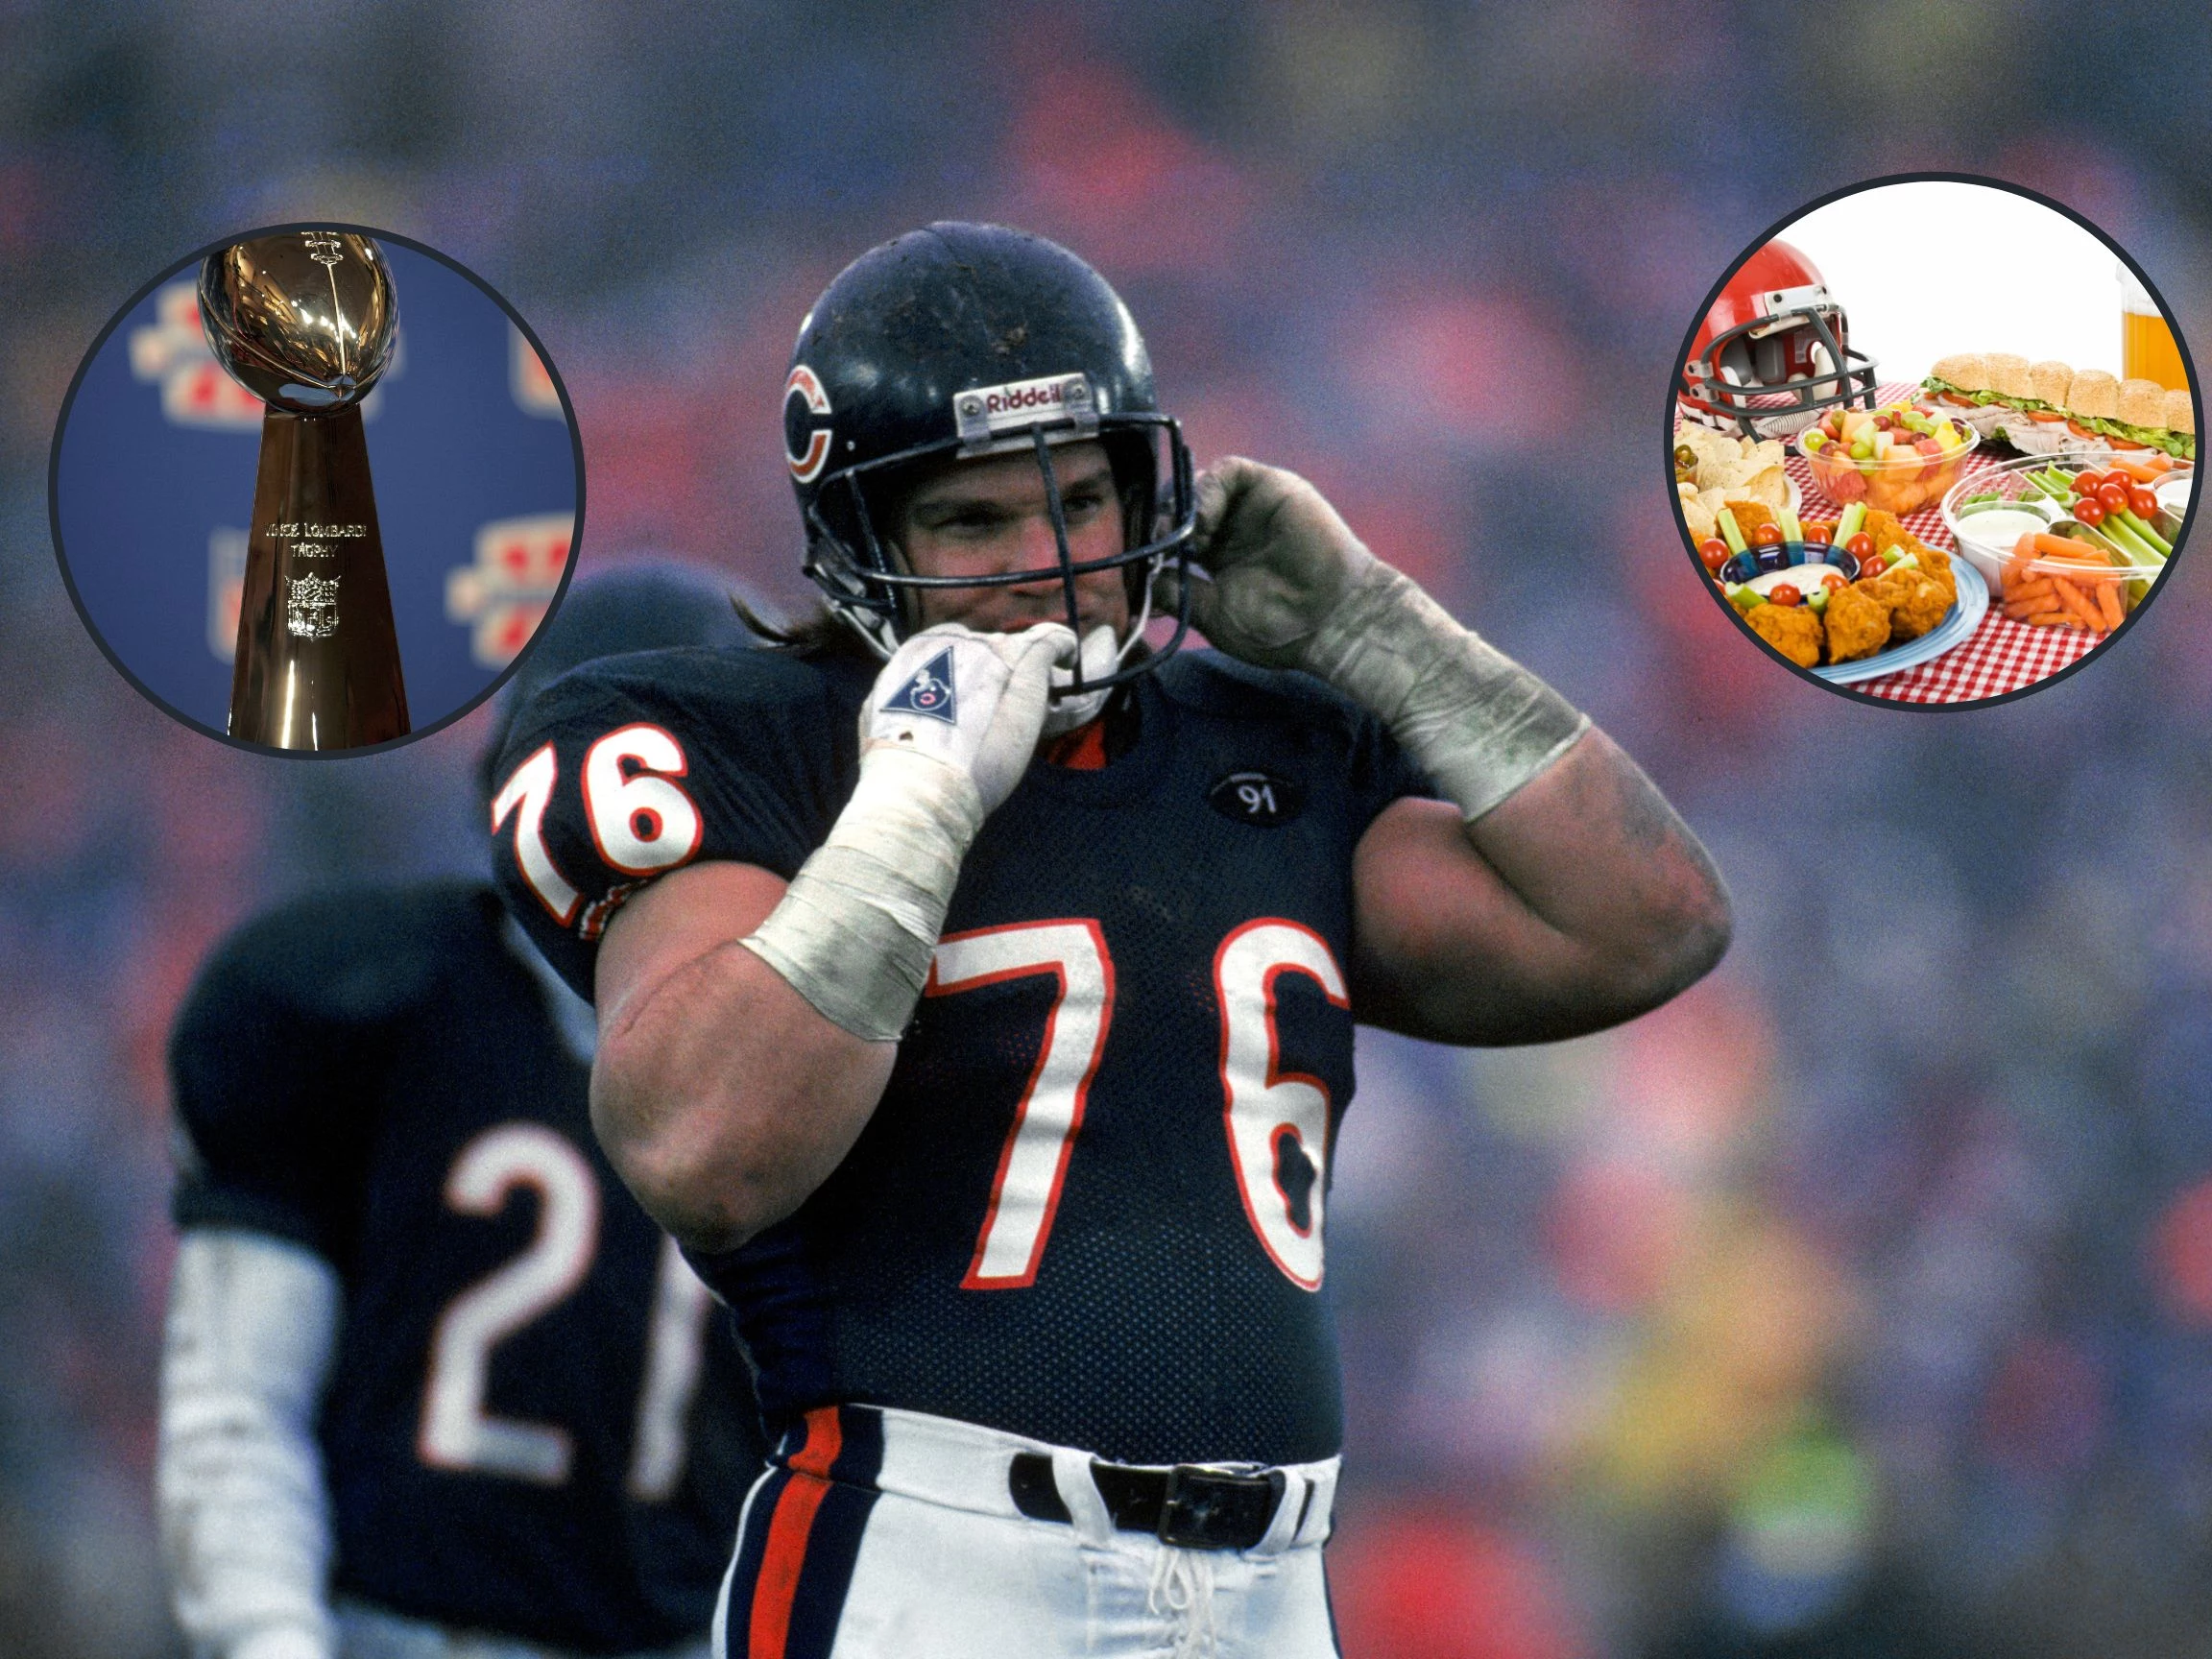 Emotional fundraiser held to support Chicago Bears legend Steve